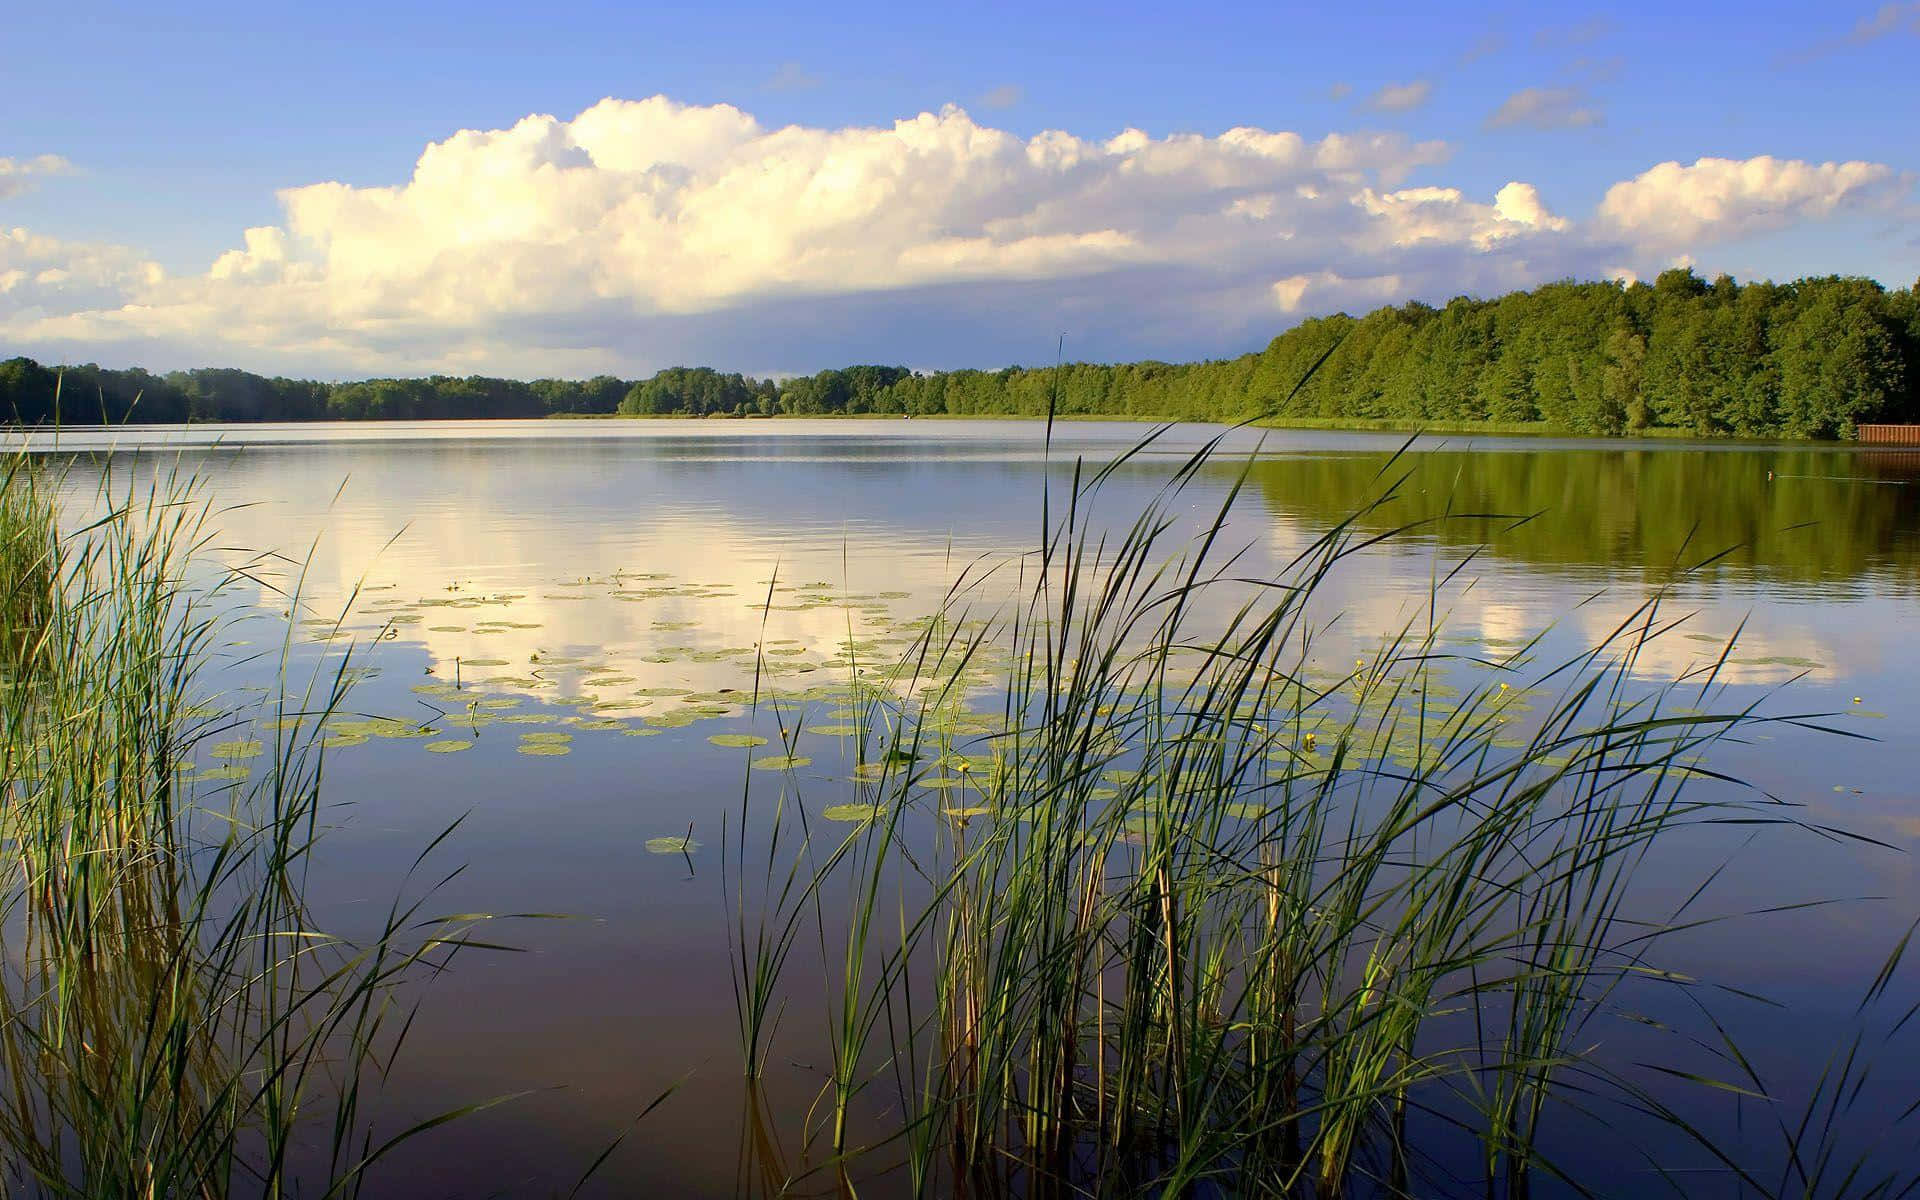 Enjoy a peaceful moment beside a beautiful pond